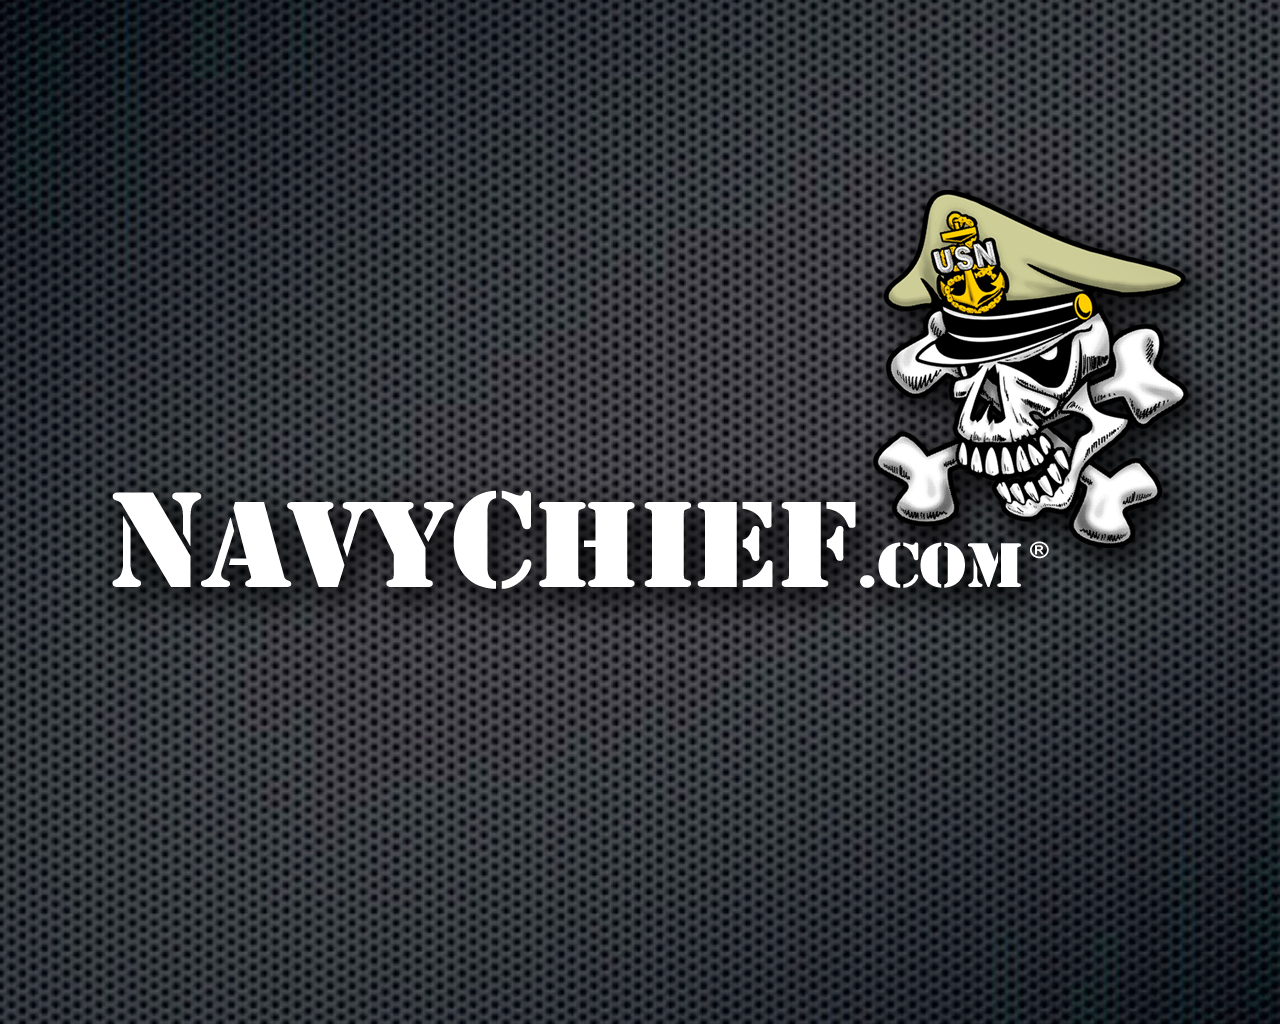 NavyChiefcom Free Wallpapers